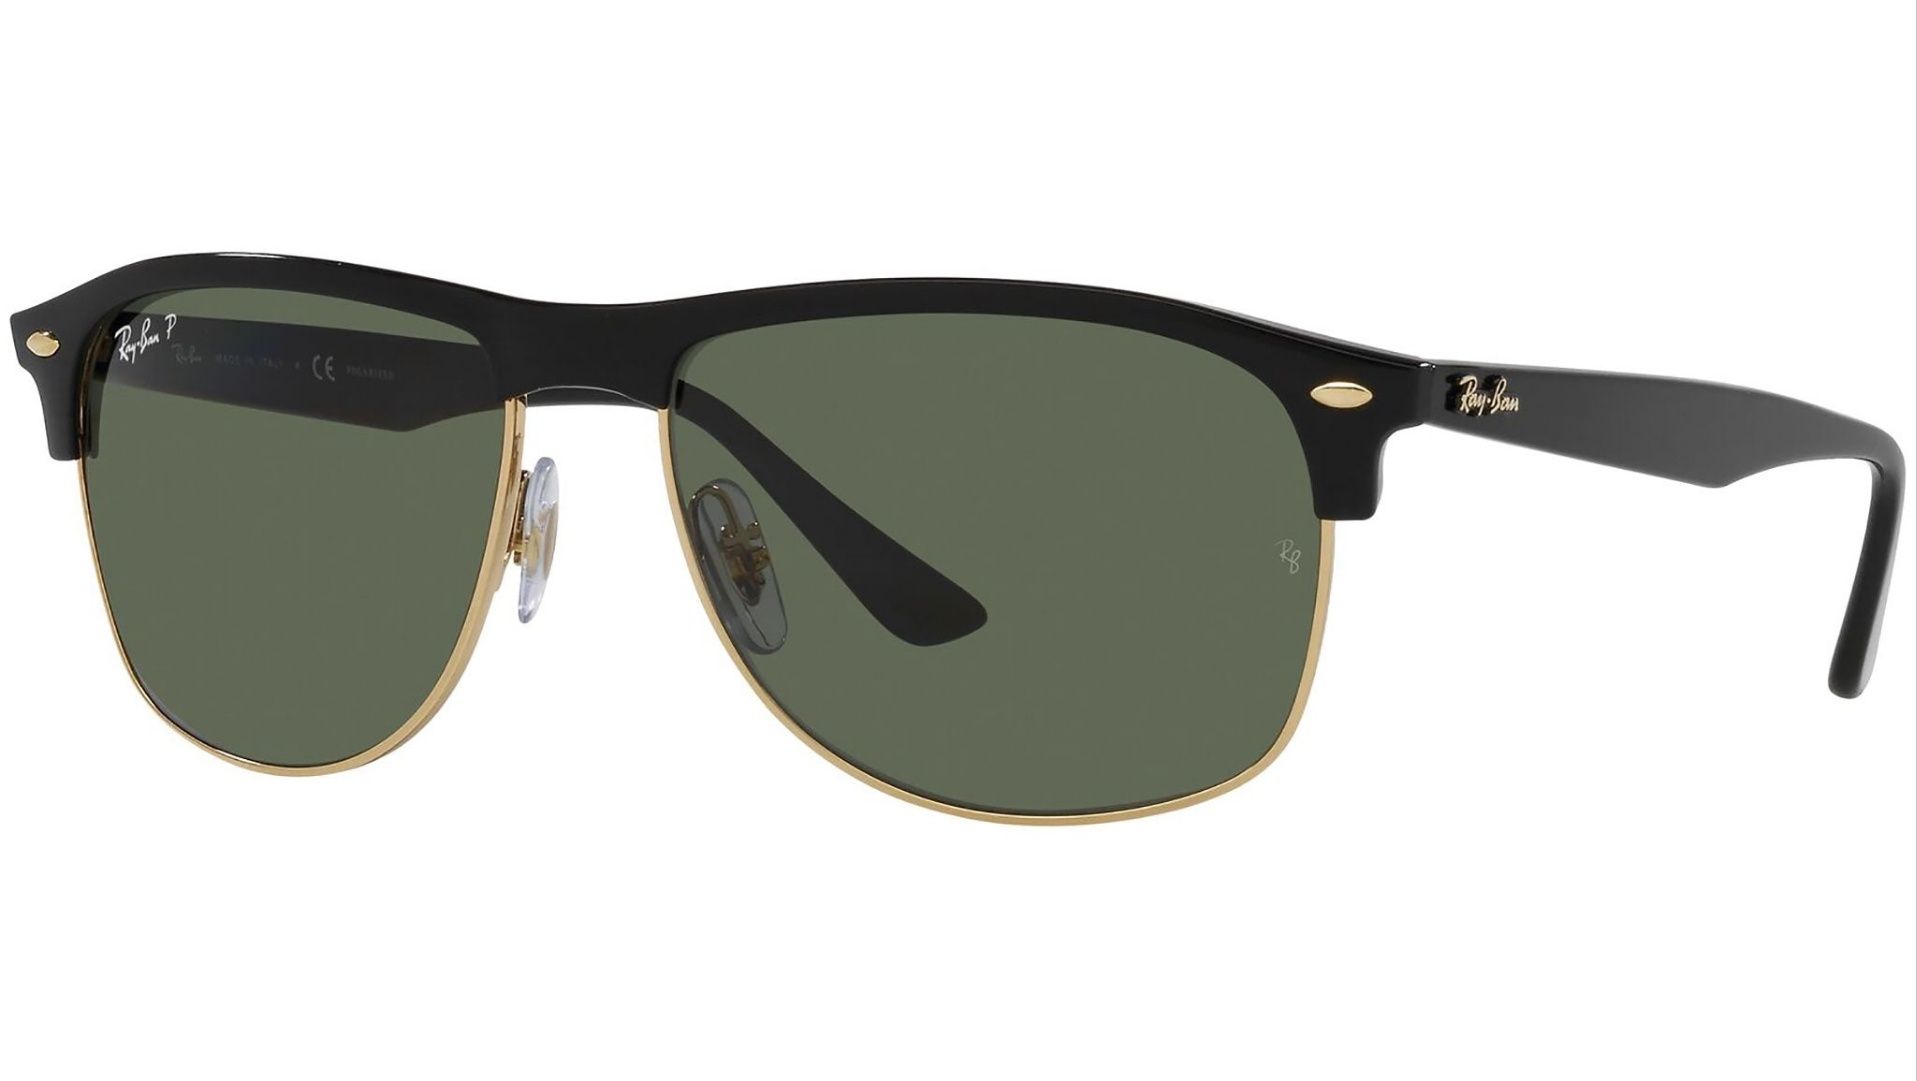 Окуляри  Ray-Ban Rb4342 Square Sunglasses, Black/Dark Green 59mm